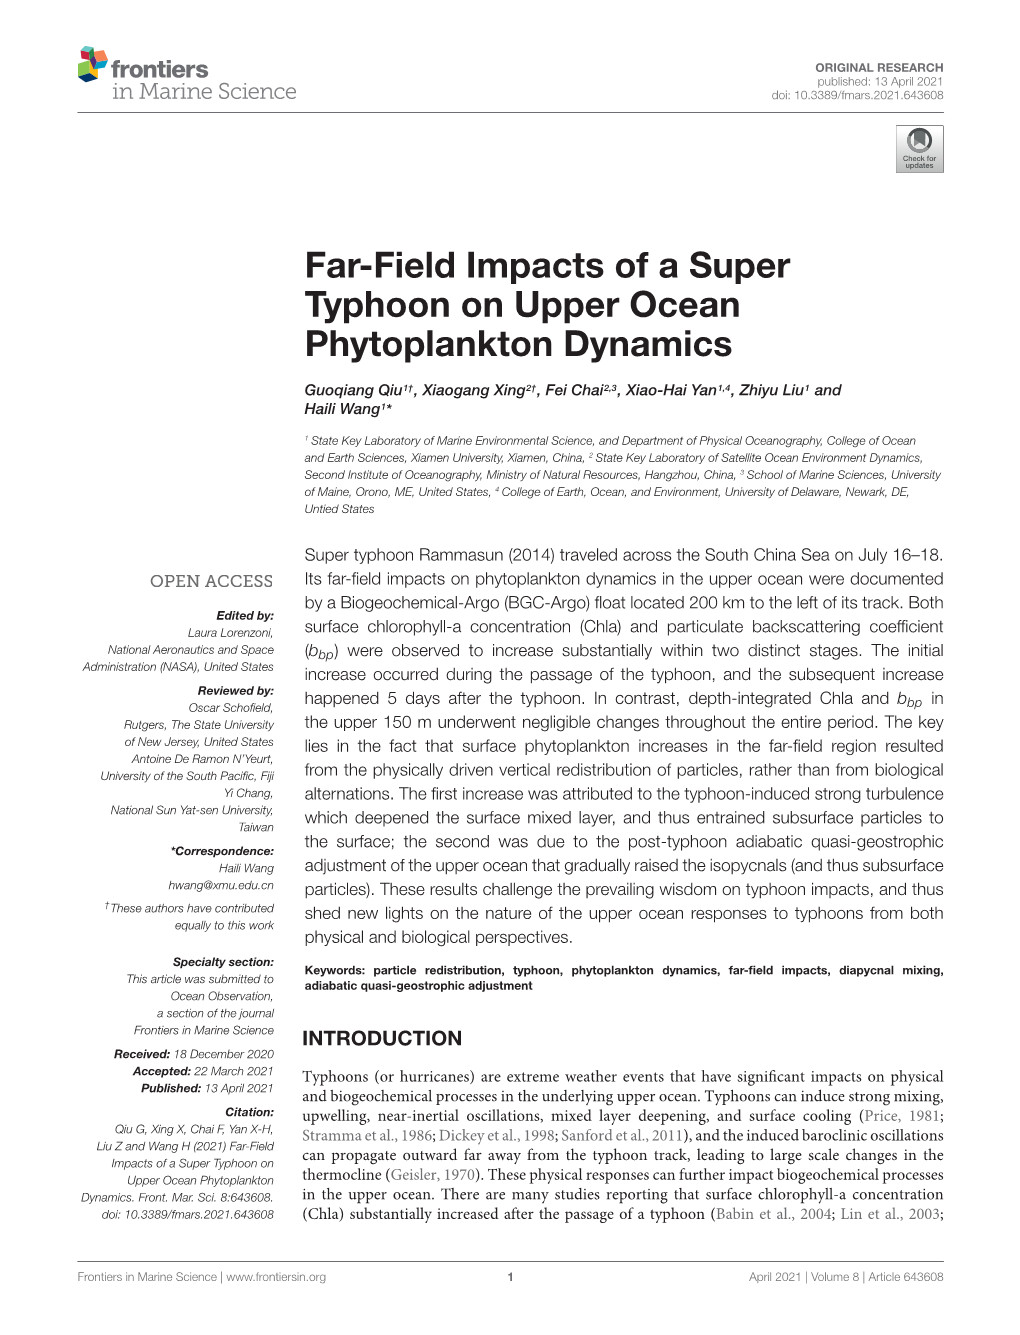 Far-Field Impacts of a Super Typhoon on Upper Ocean Phytoplankton Dynamics